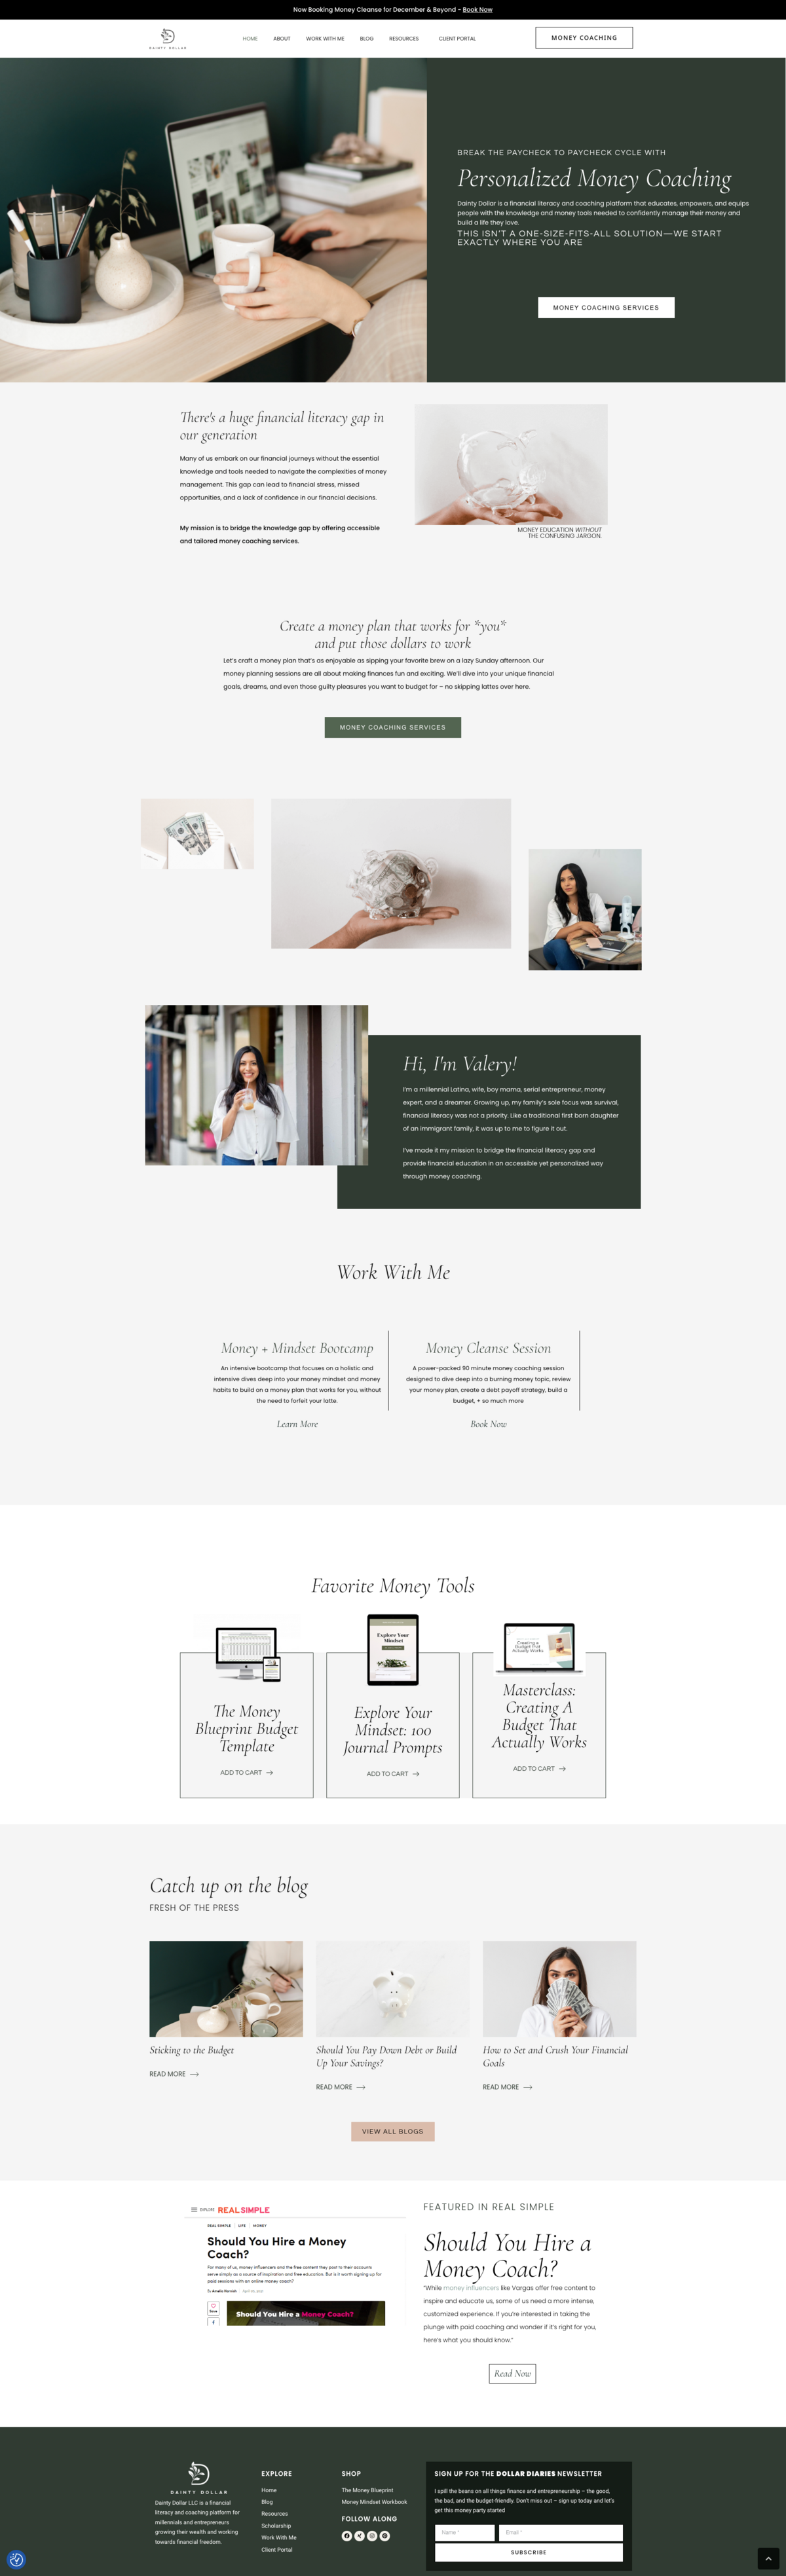 dainty-creative-co-portfolio-online-coach-dainty-dollar-mockup-custom-website-design-seo